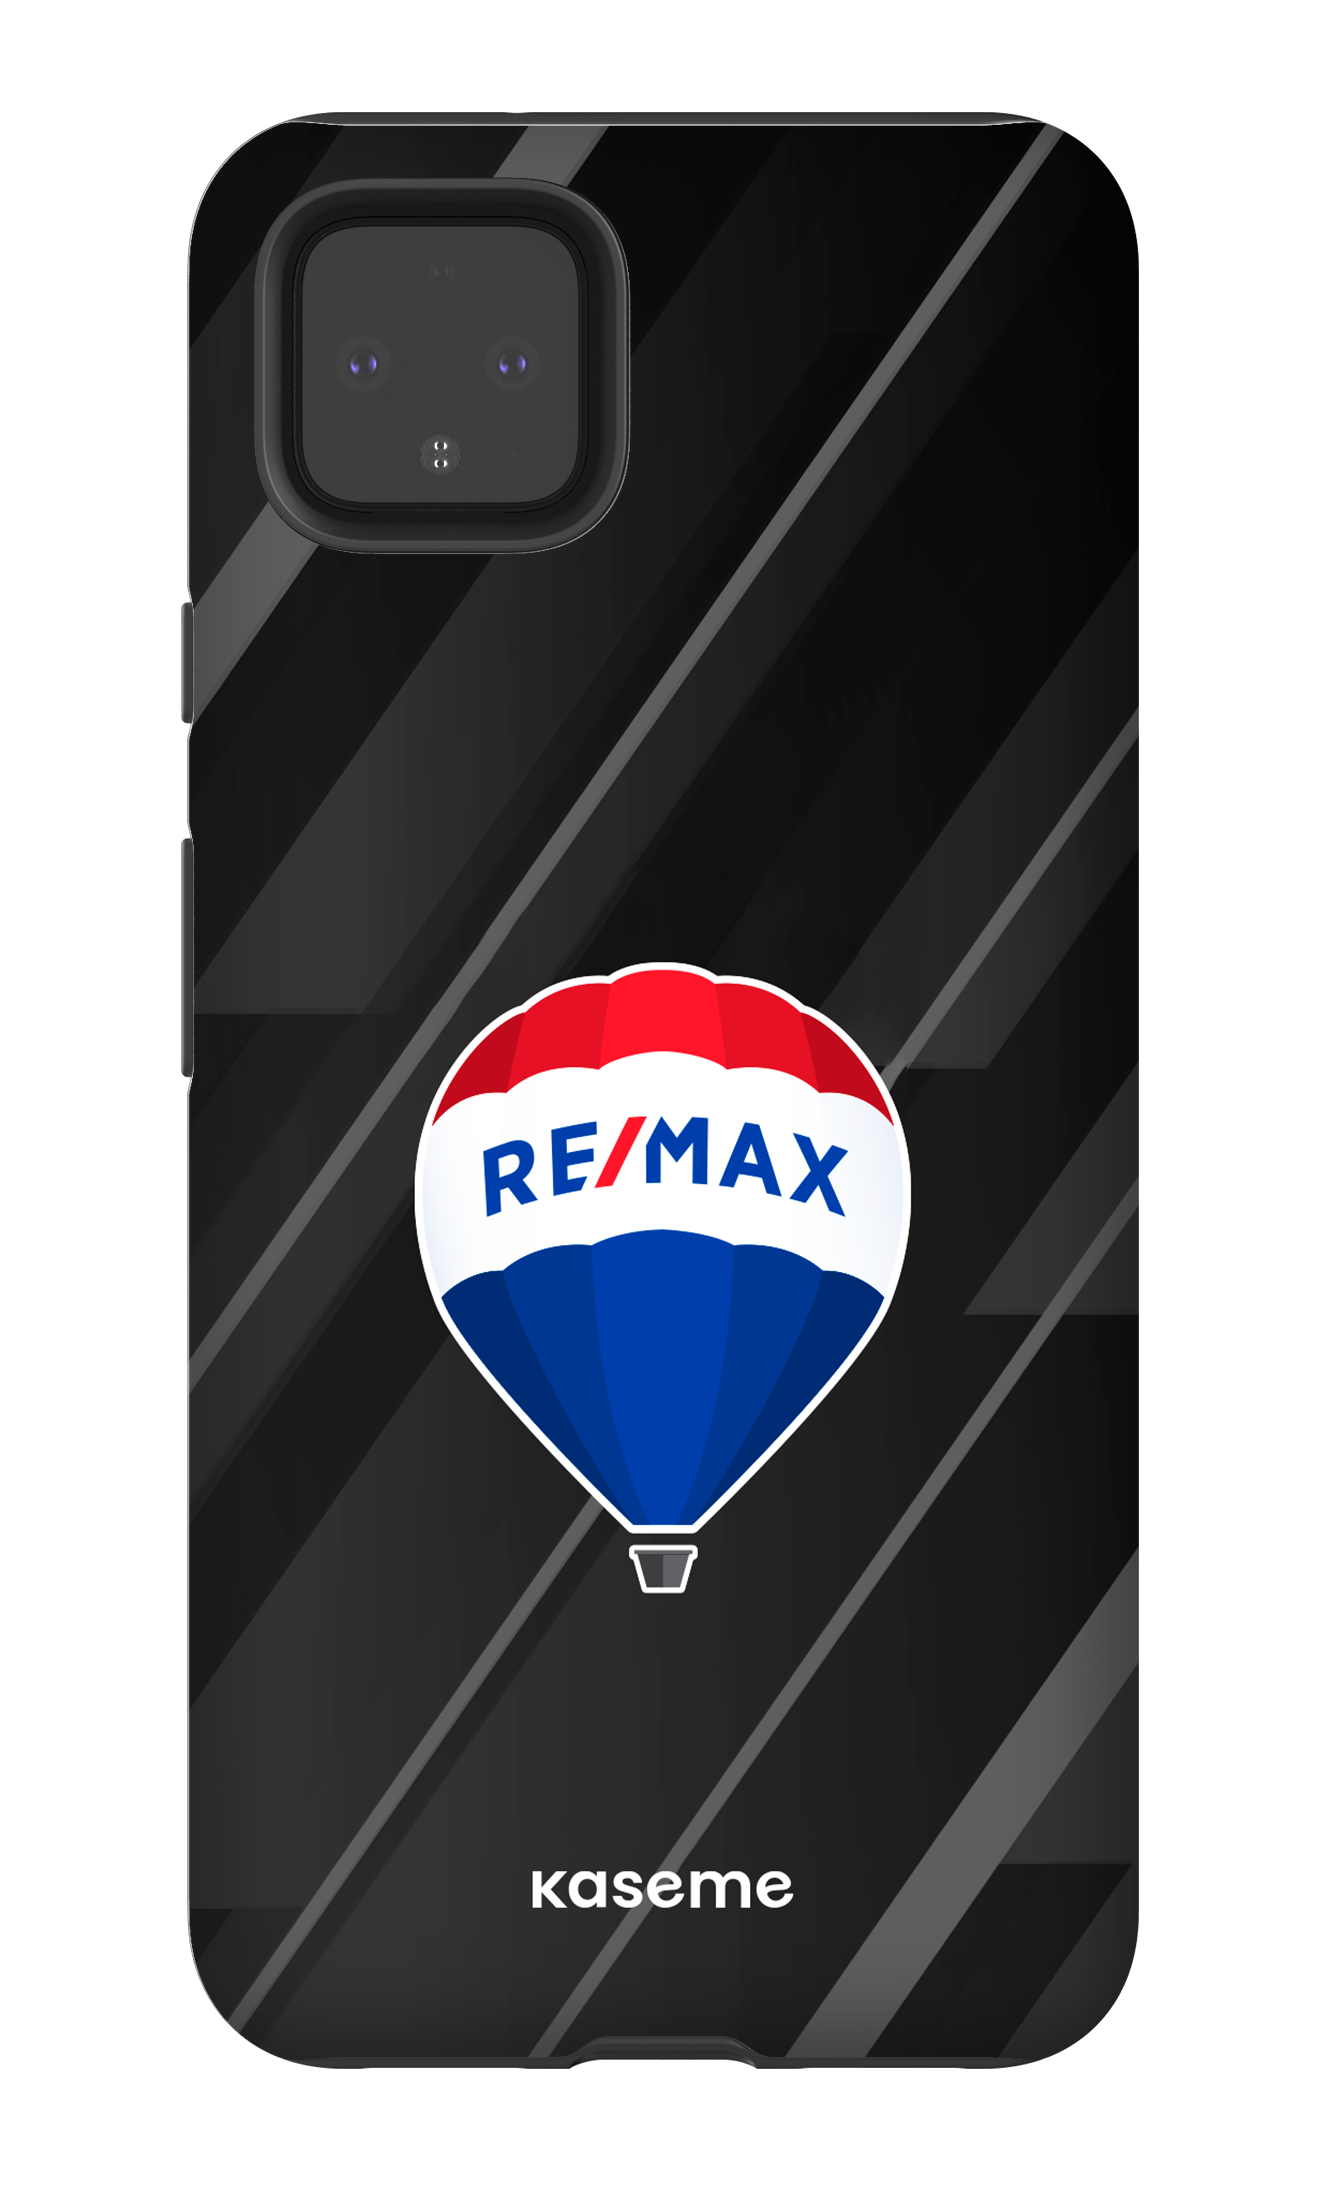 Remax Noir - Google Pixel 4 XL